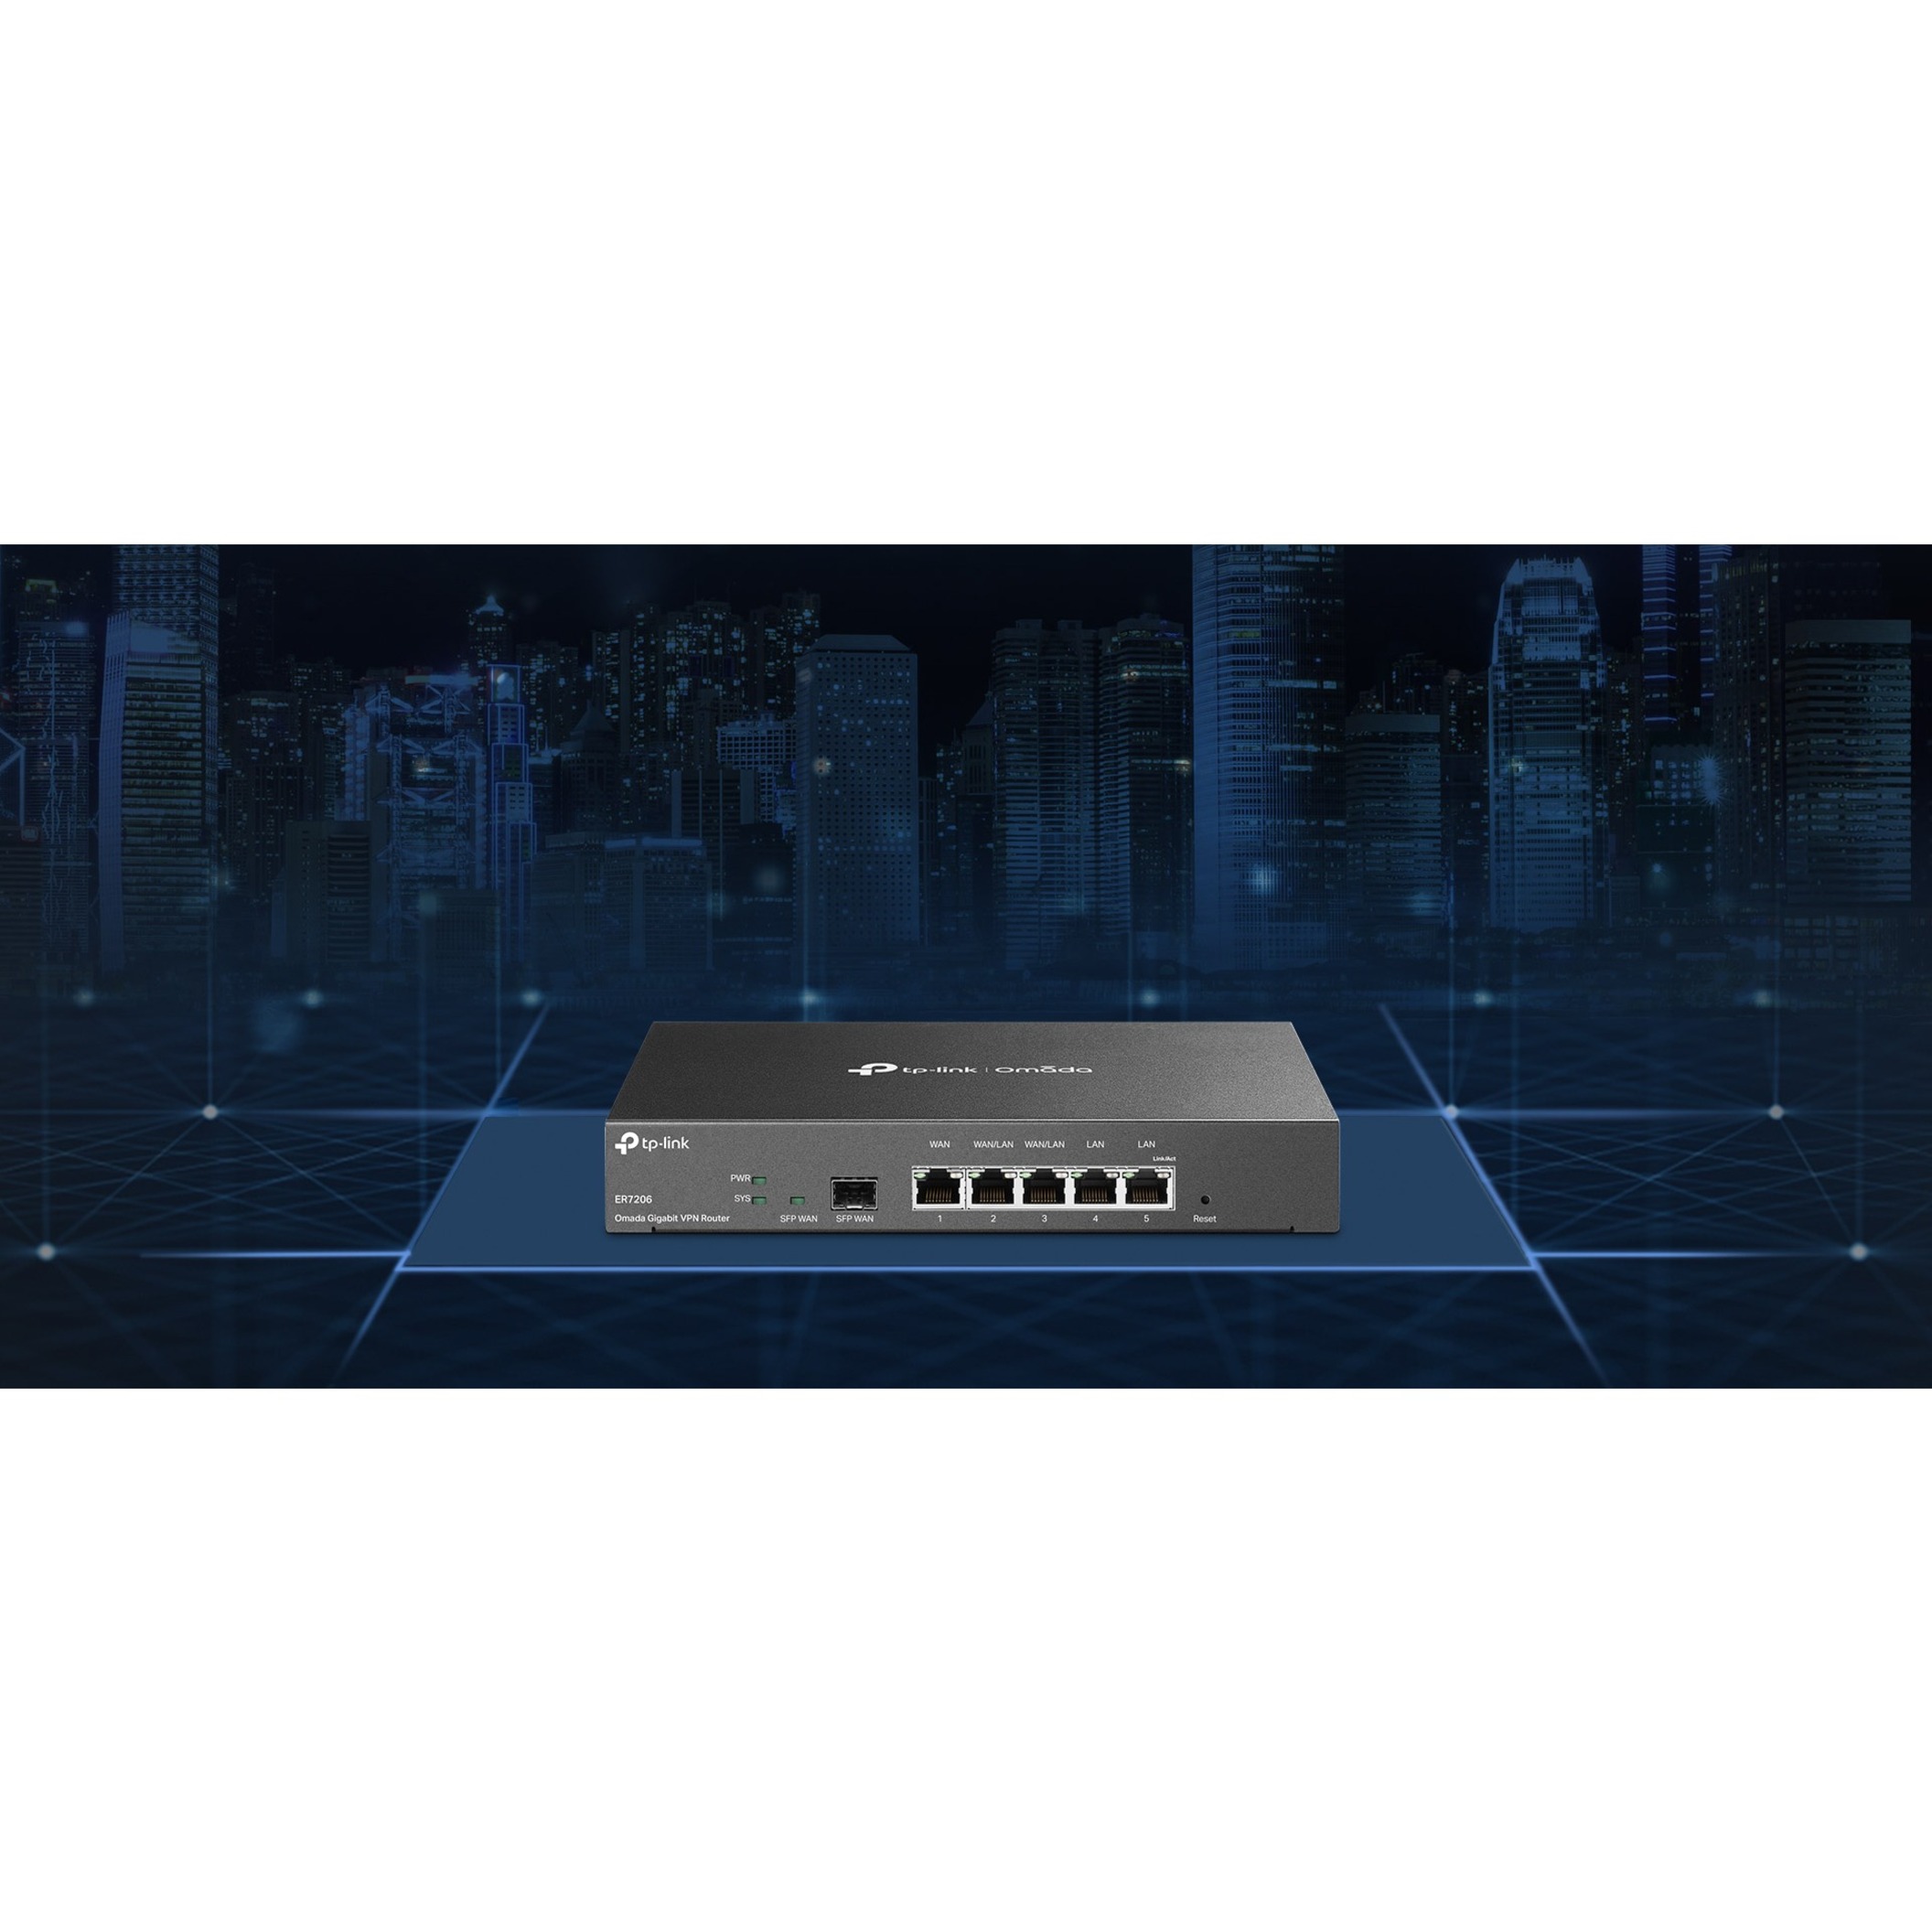 TP-Link ER7206 - Multi-WAN Professional Wired Gigabit VPN Router - image 4 of 10